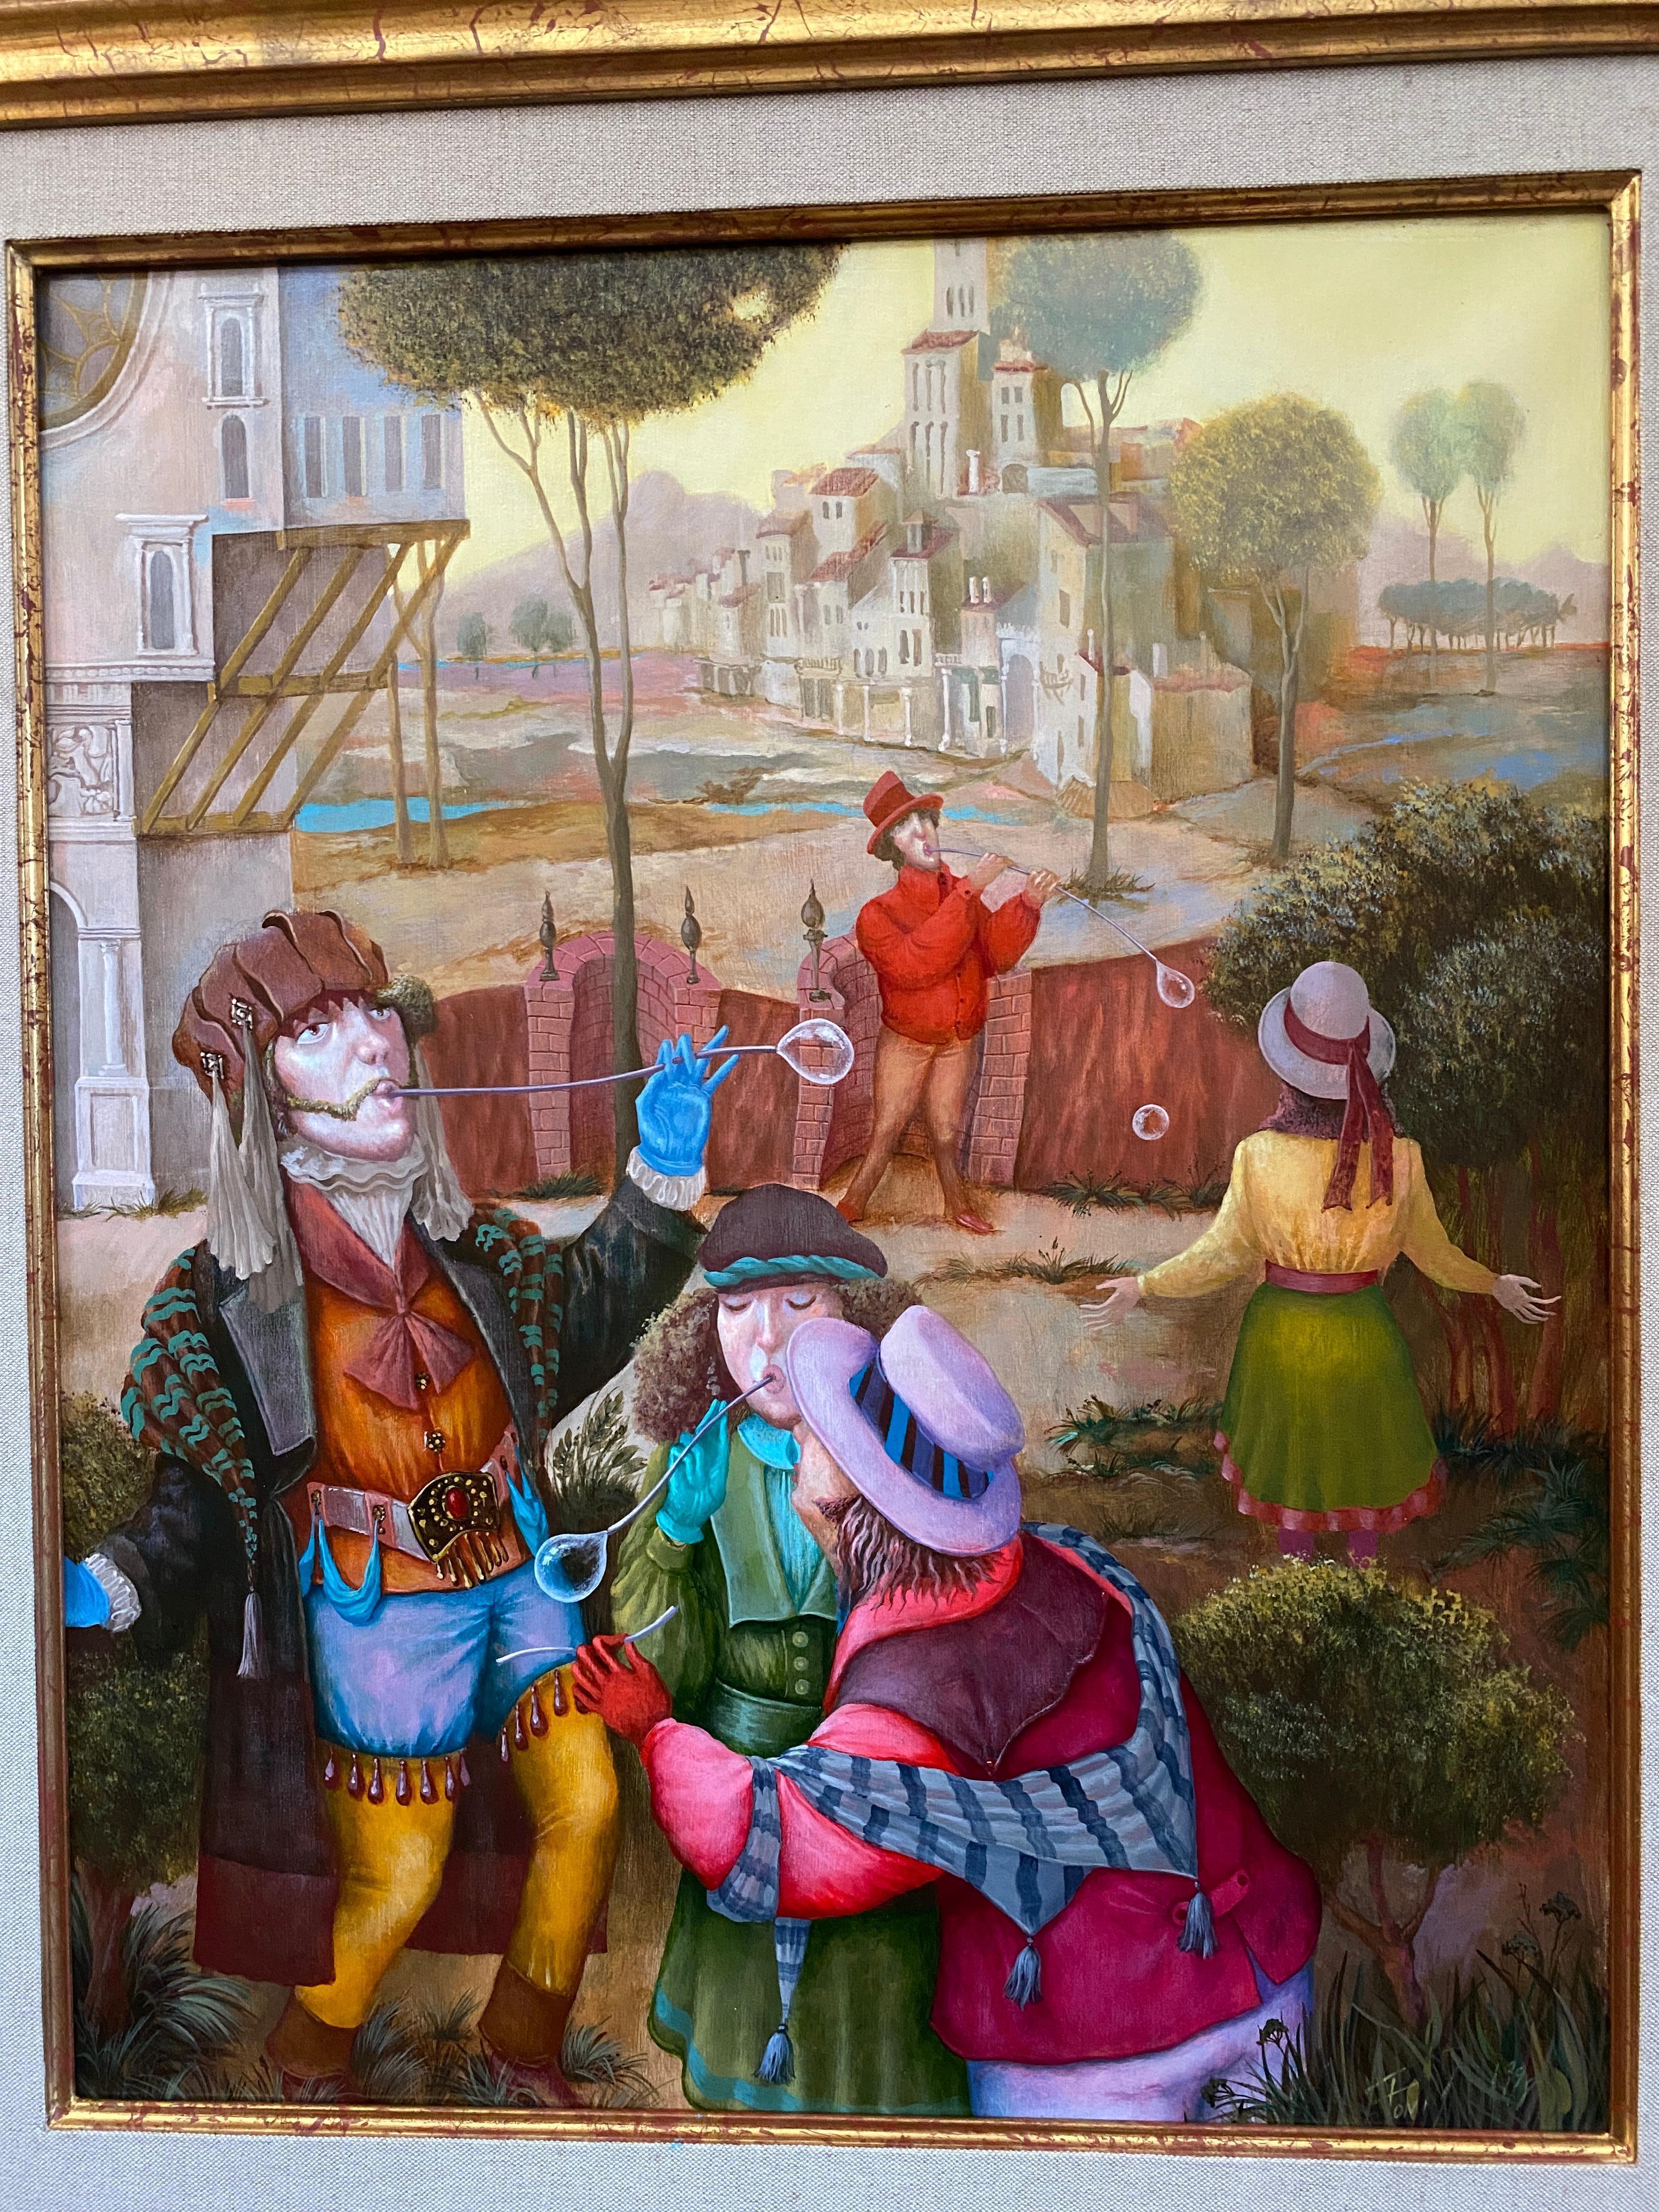 Die Blubberer (Los Burbujeros.. Figurative Malerei. Landschaft mit Figuren in Renaissanceumgebung.
Acryl auf Leinwand.
Autor: Igor Fomin.
Maße in Zentimetern: 65 x 54 x 3 cm. / Gerahmt: 94 x 83 x 5 cm.
In Zoll: 25.56 x 21,26 x 1,18 